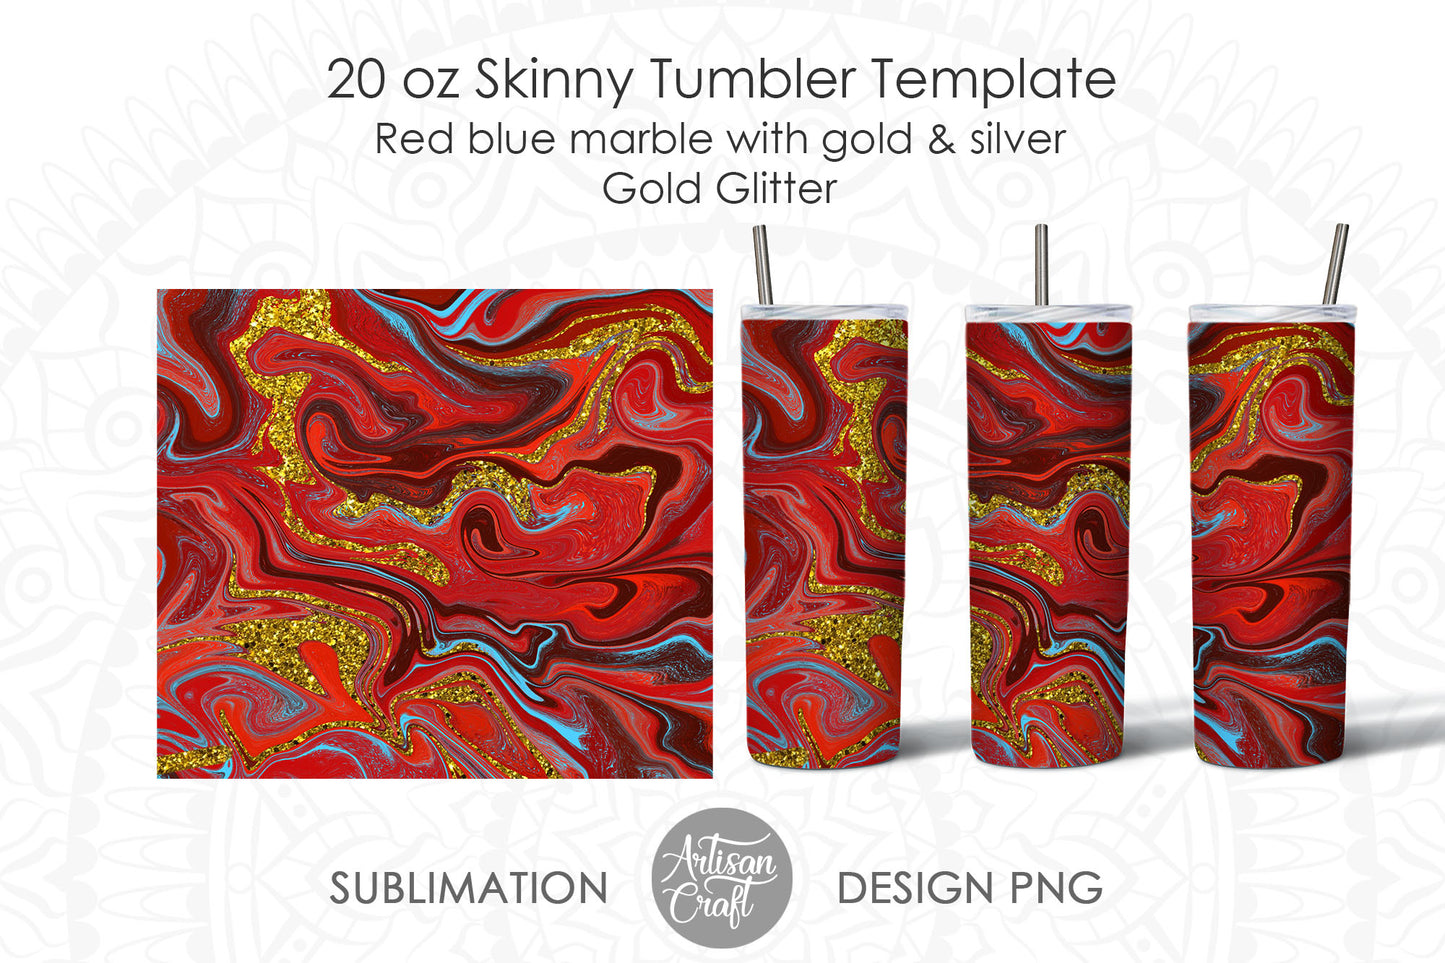 Tumbler designs templates with fluid art